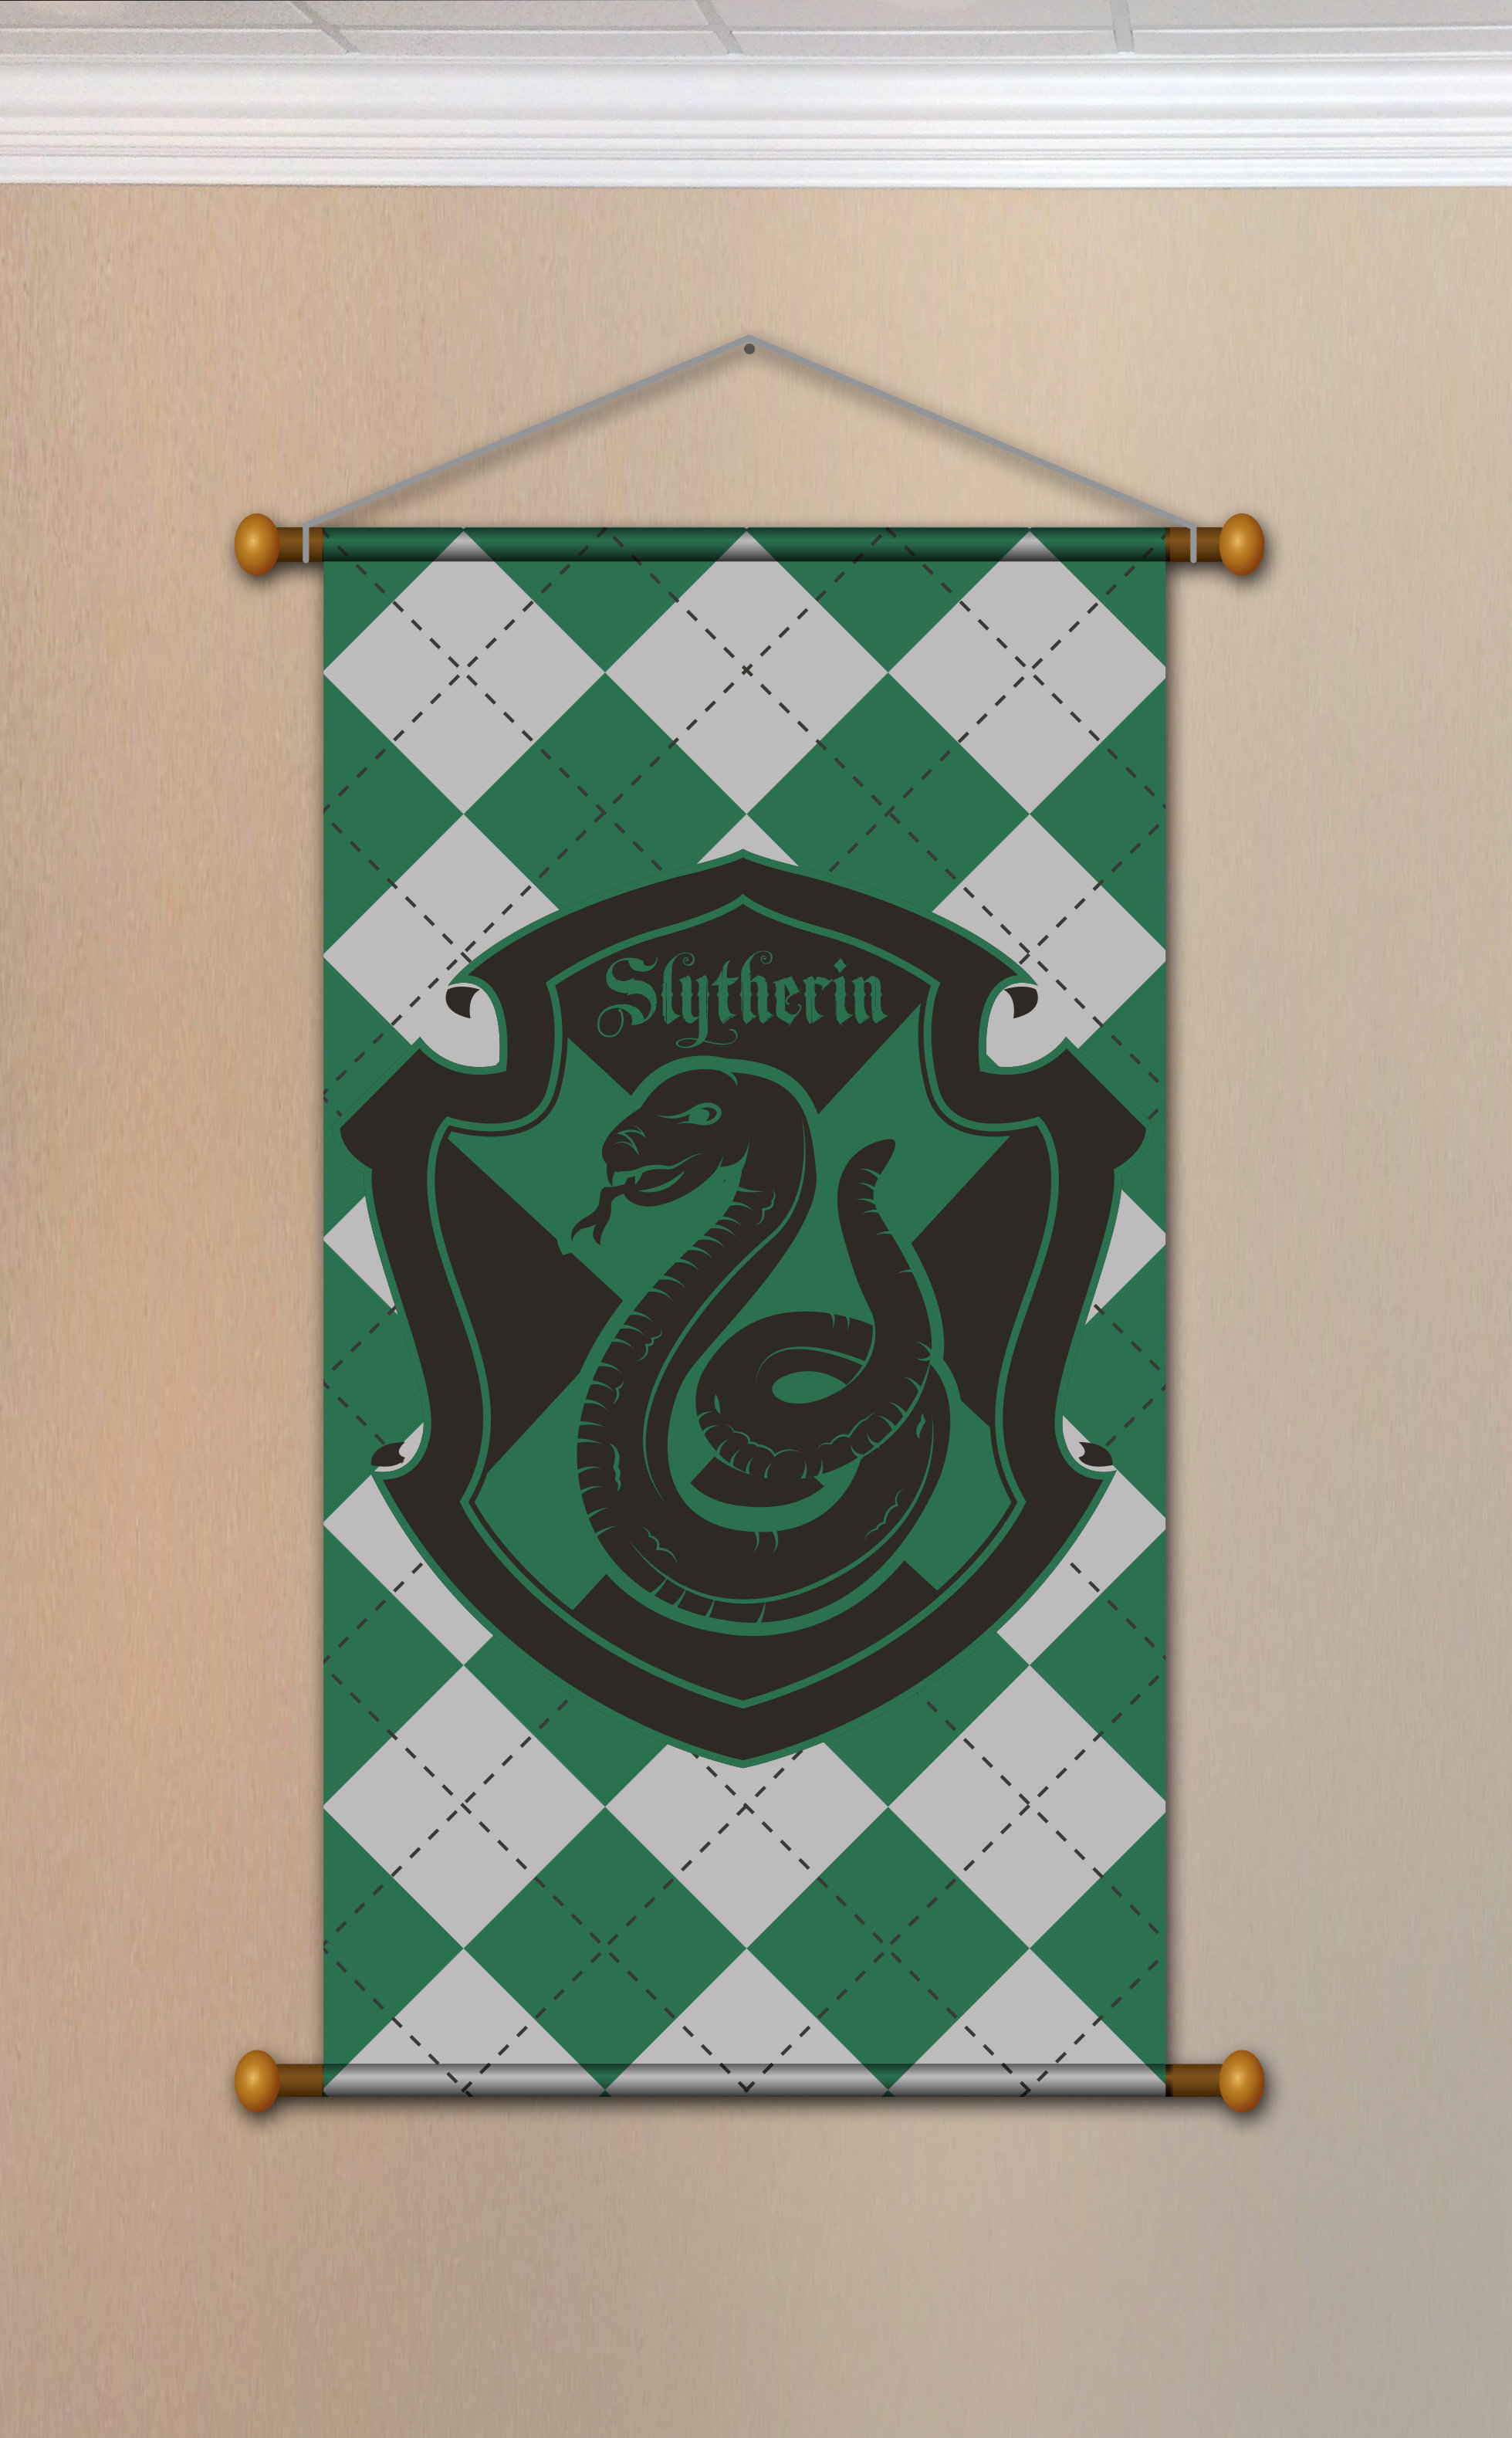 Harry Potter 34 Ravenclaw House Banner